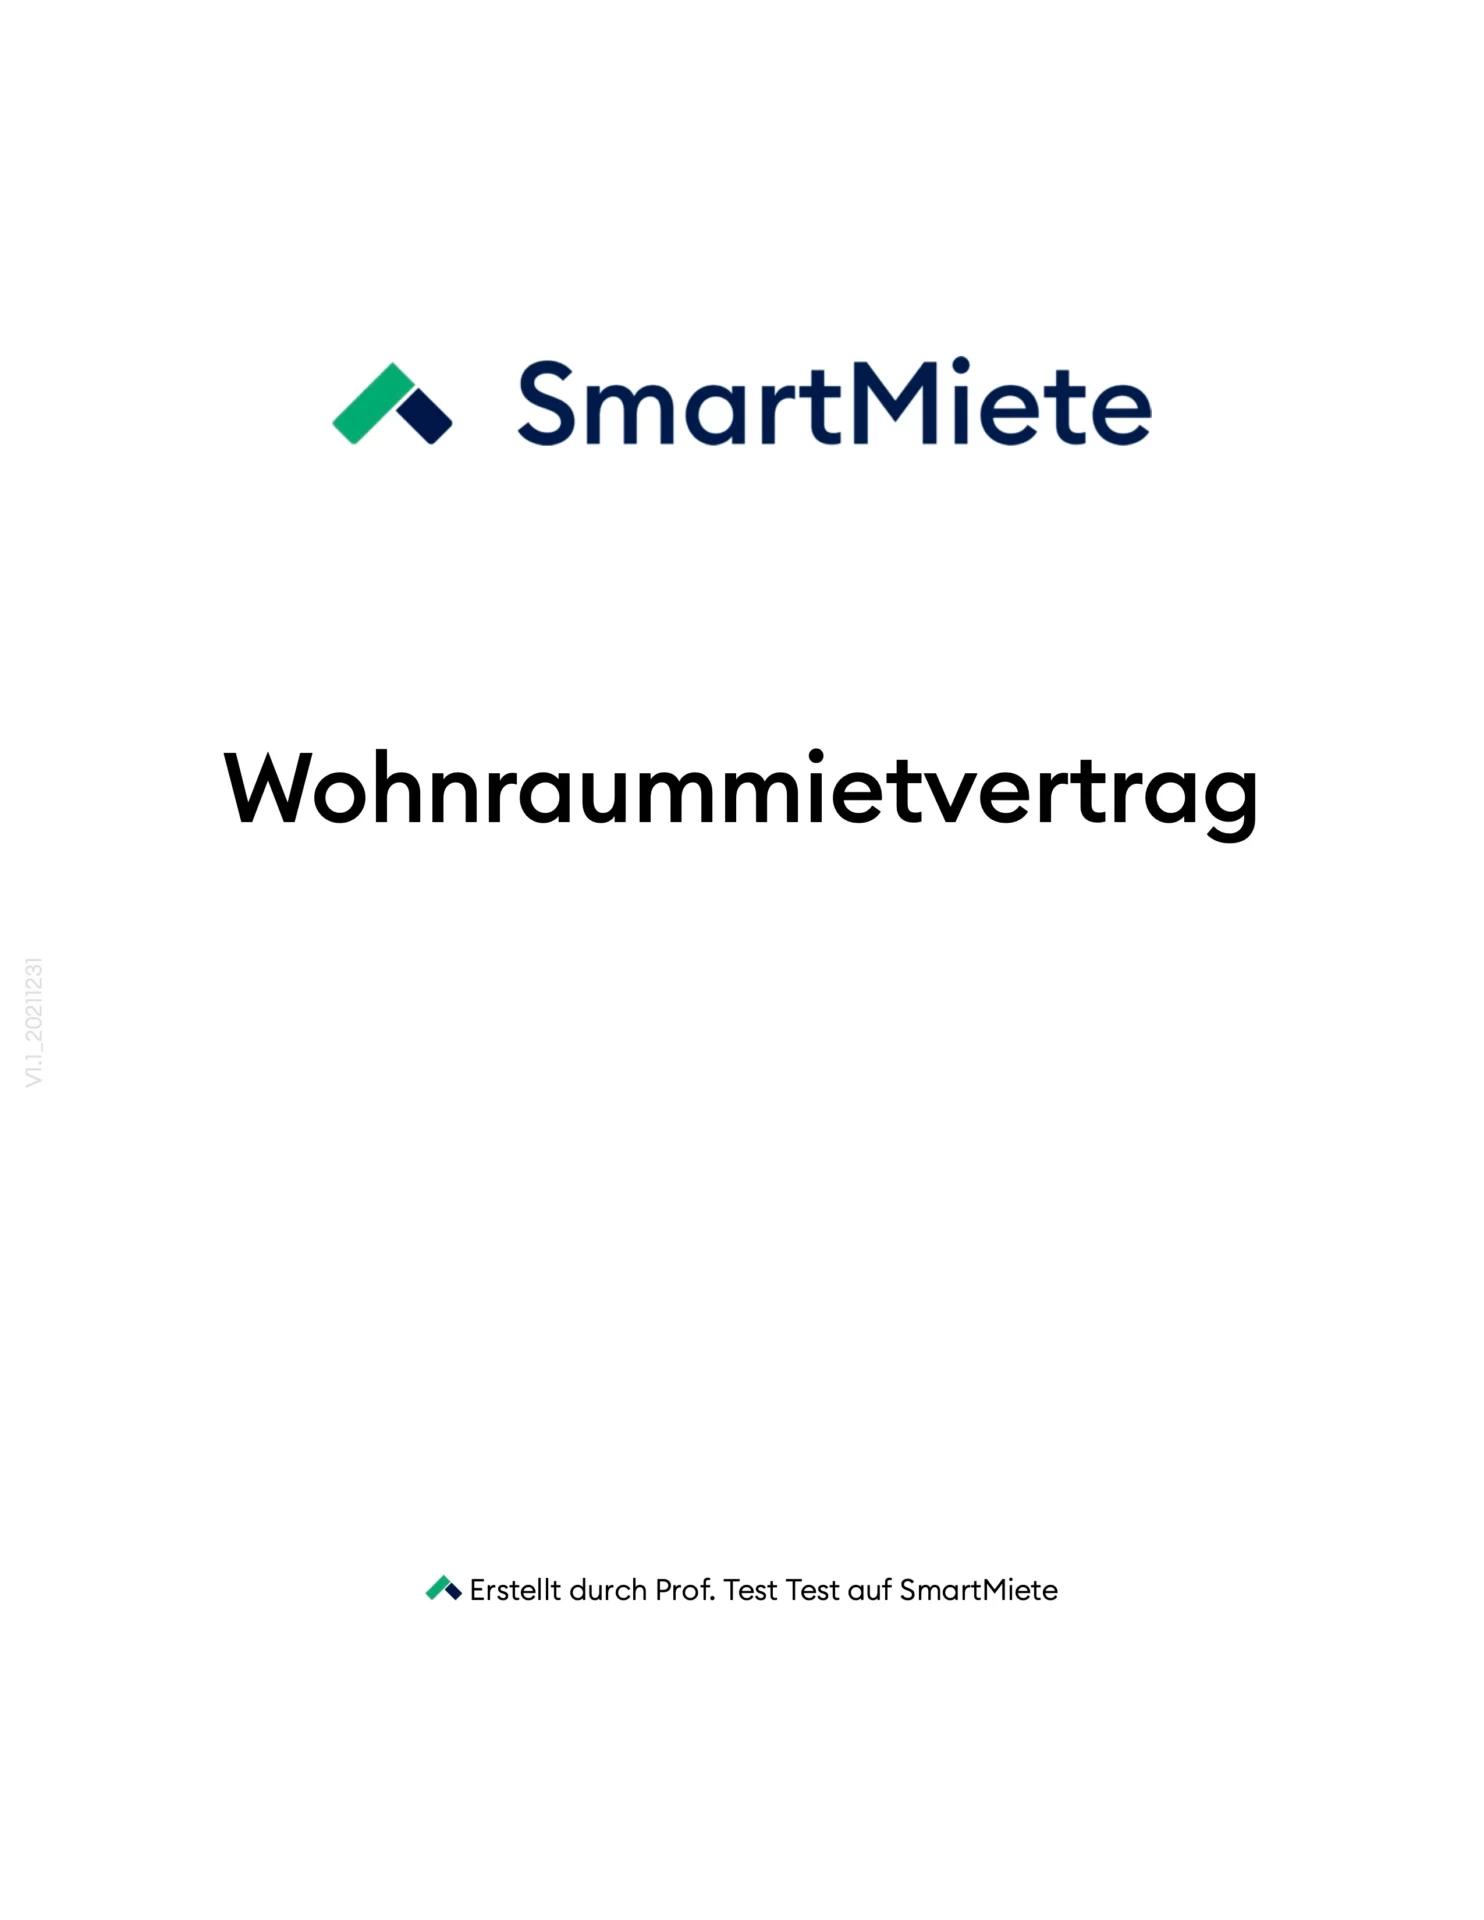 Wohnraummietvertrag_SmartMiete1